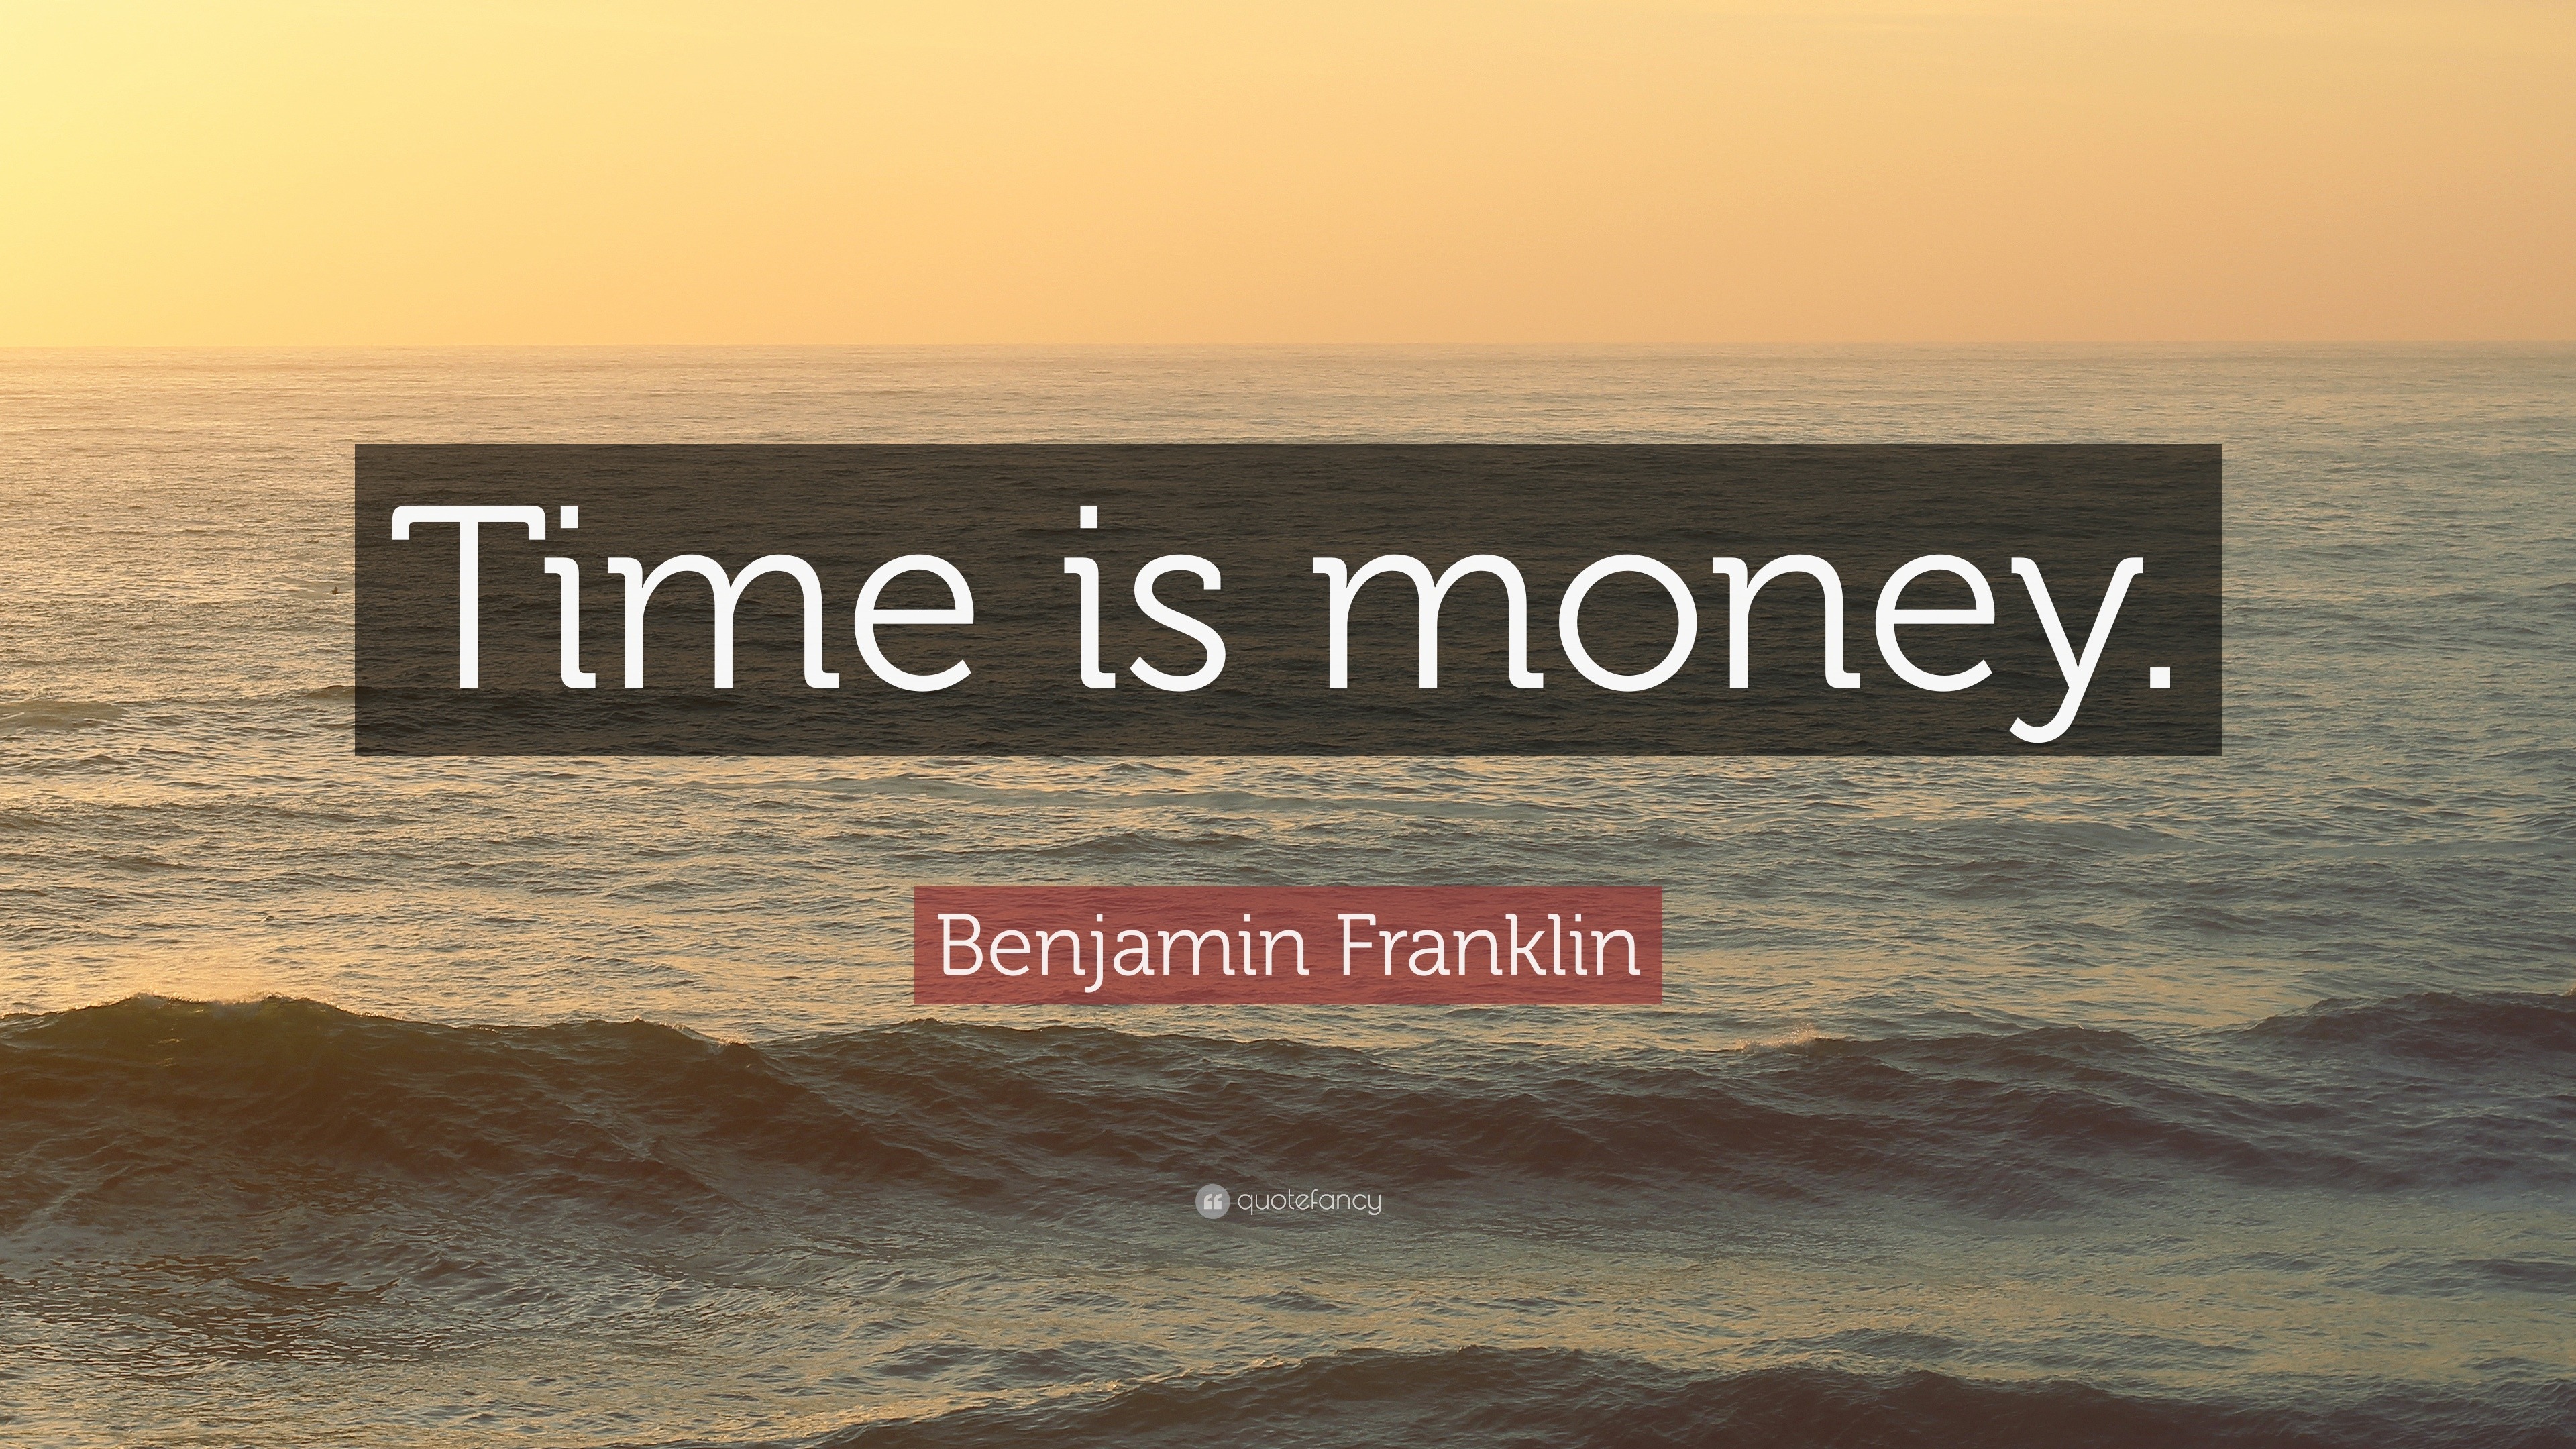 Benjamin Franklin Quote: “Time is money.”